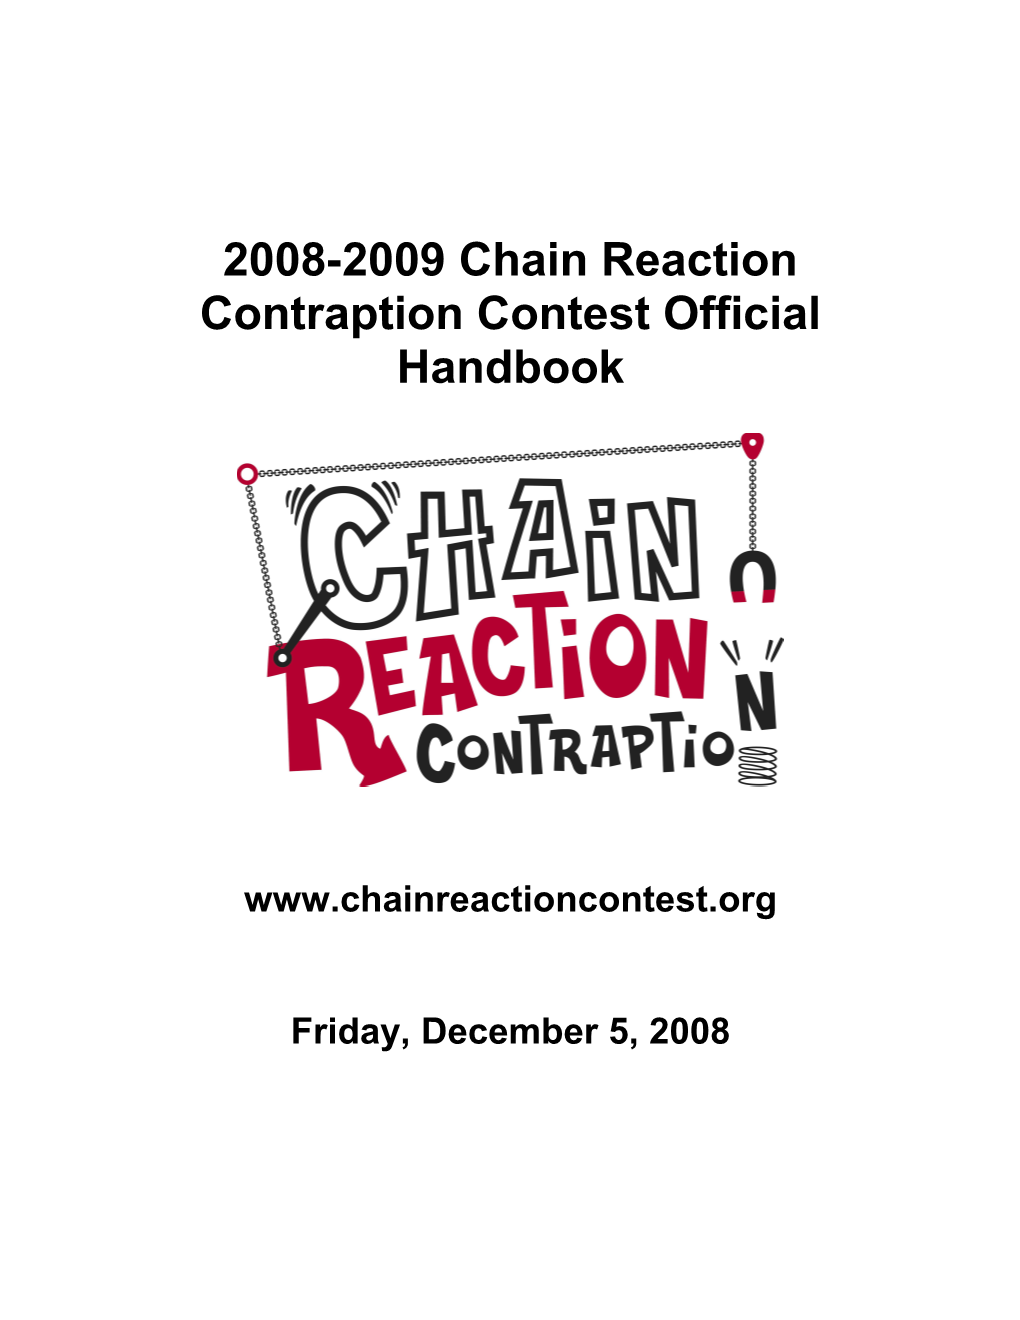 2007-2008 Chain Reaction Contraption Official Handbook